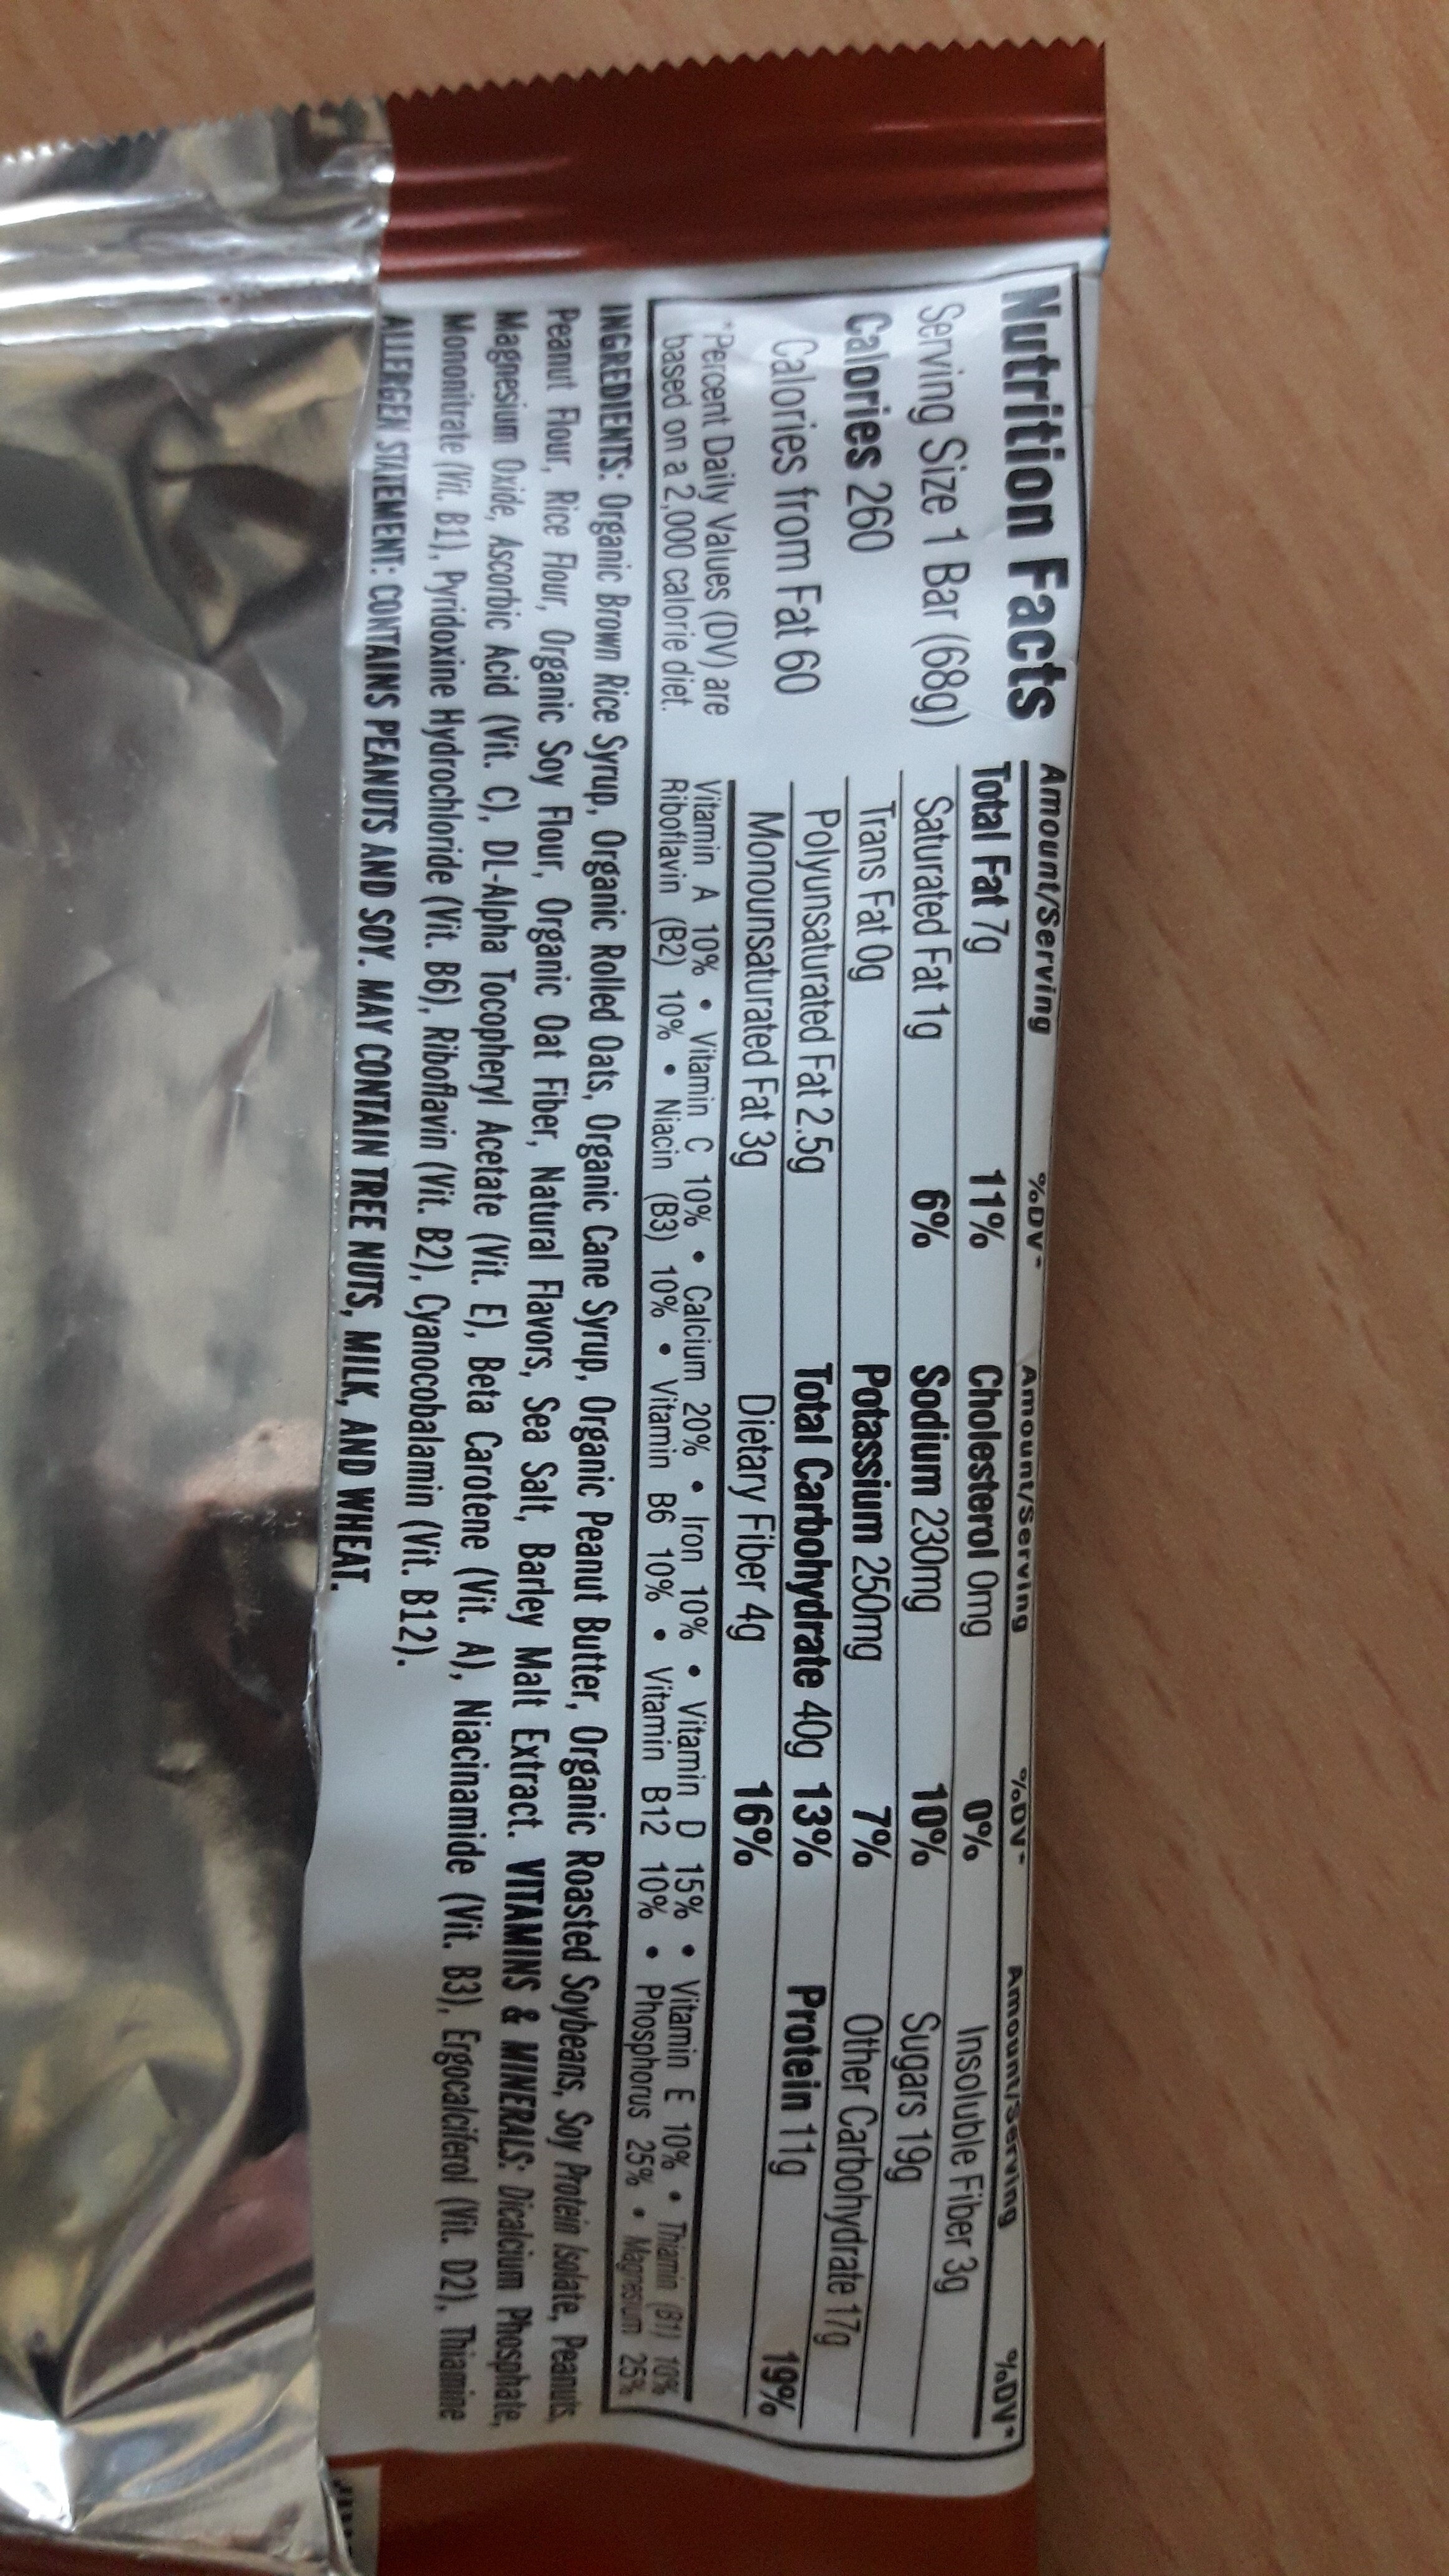 Energy bars crunchy peanut butter ounce protein bars - Ingrédients - en